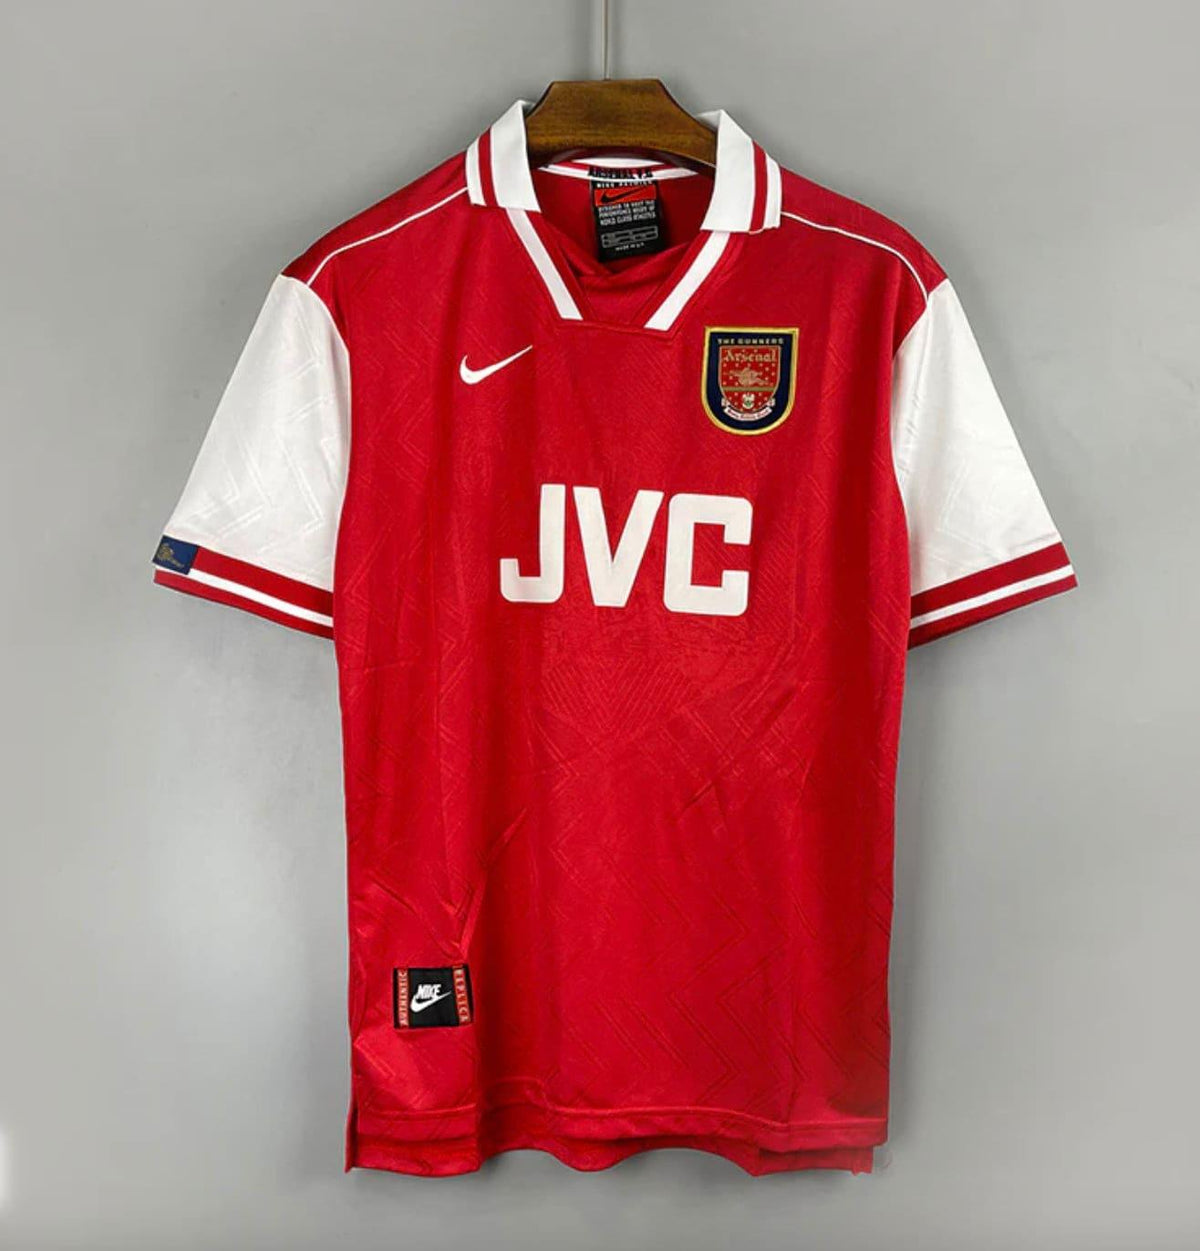 Old school Arsenal 1997's home jersey JVC sponsor